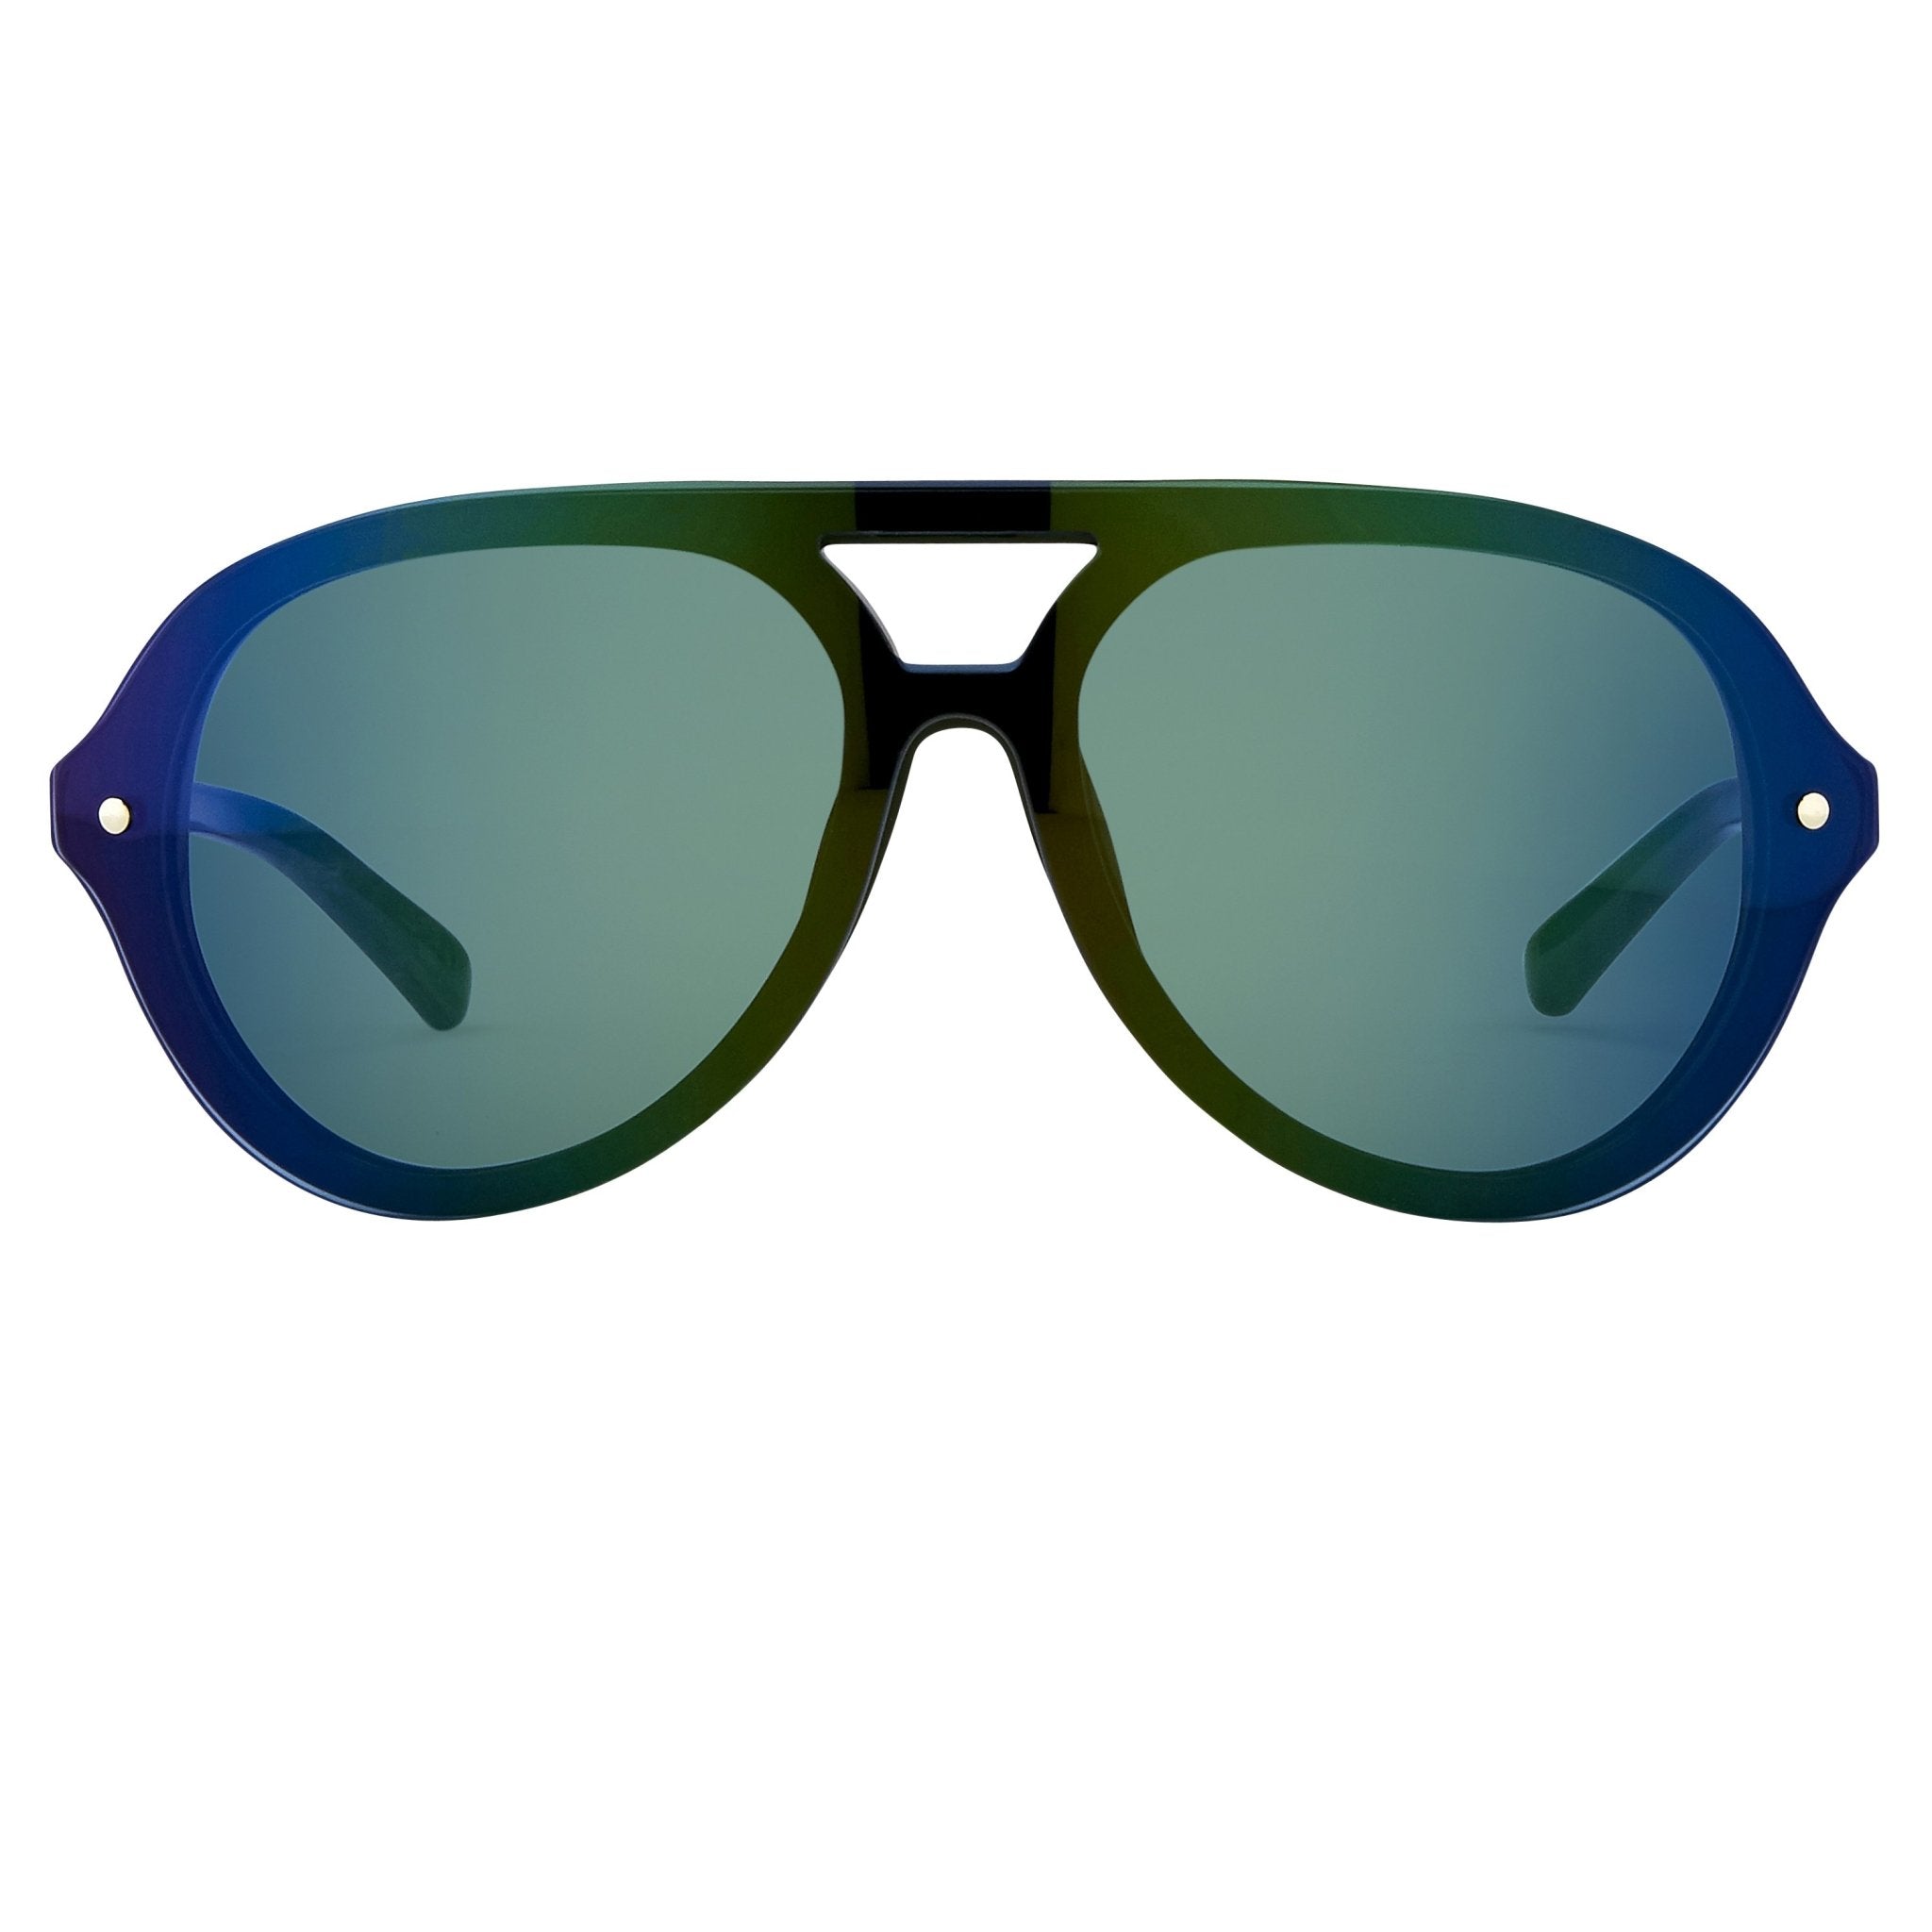 Phillip Lim Sunglasses Aviator Male Hunter Beetle Green CAT3 Dark Tint Green Mirror Lenses - PL117C5SUN - Watches & Crystals